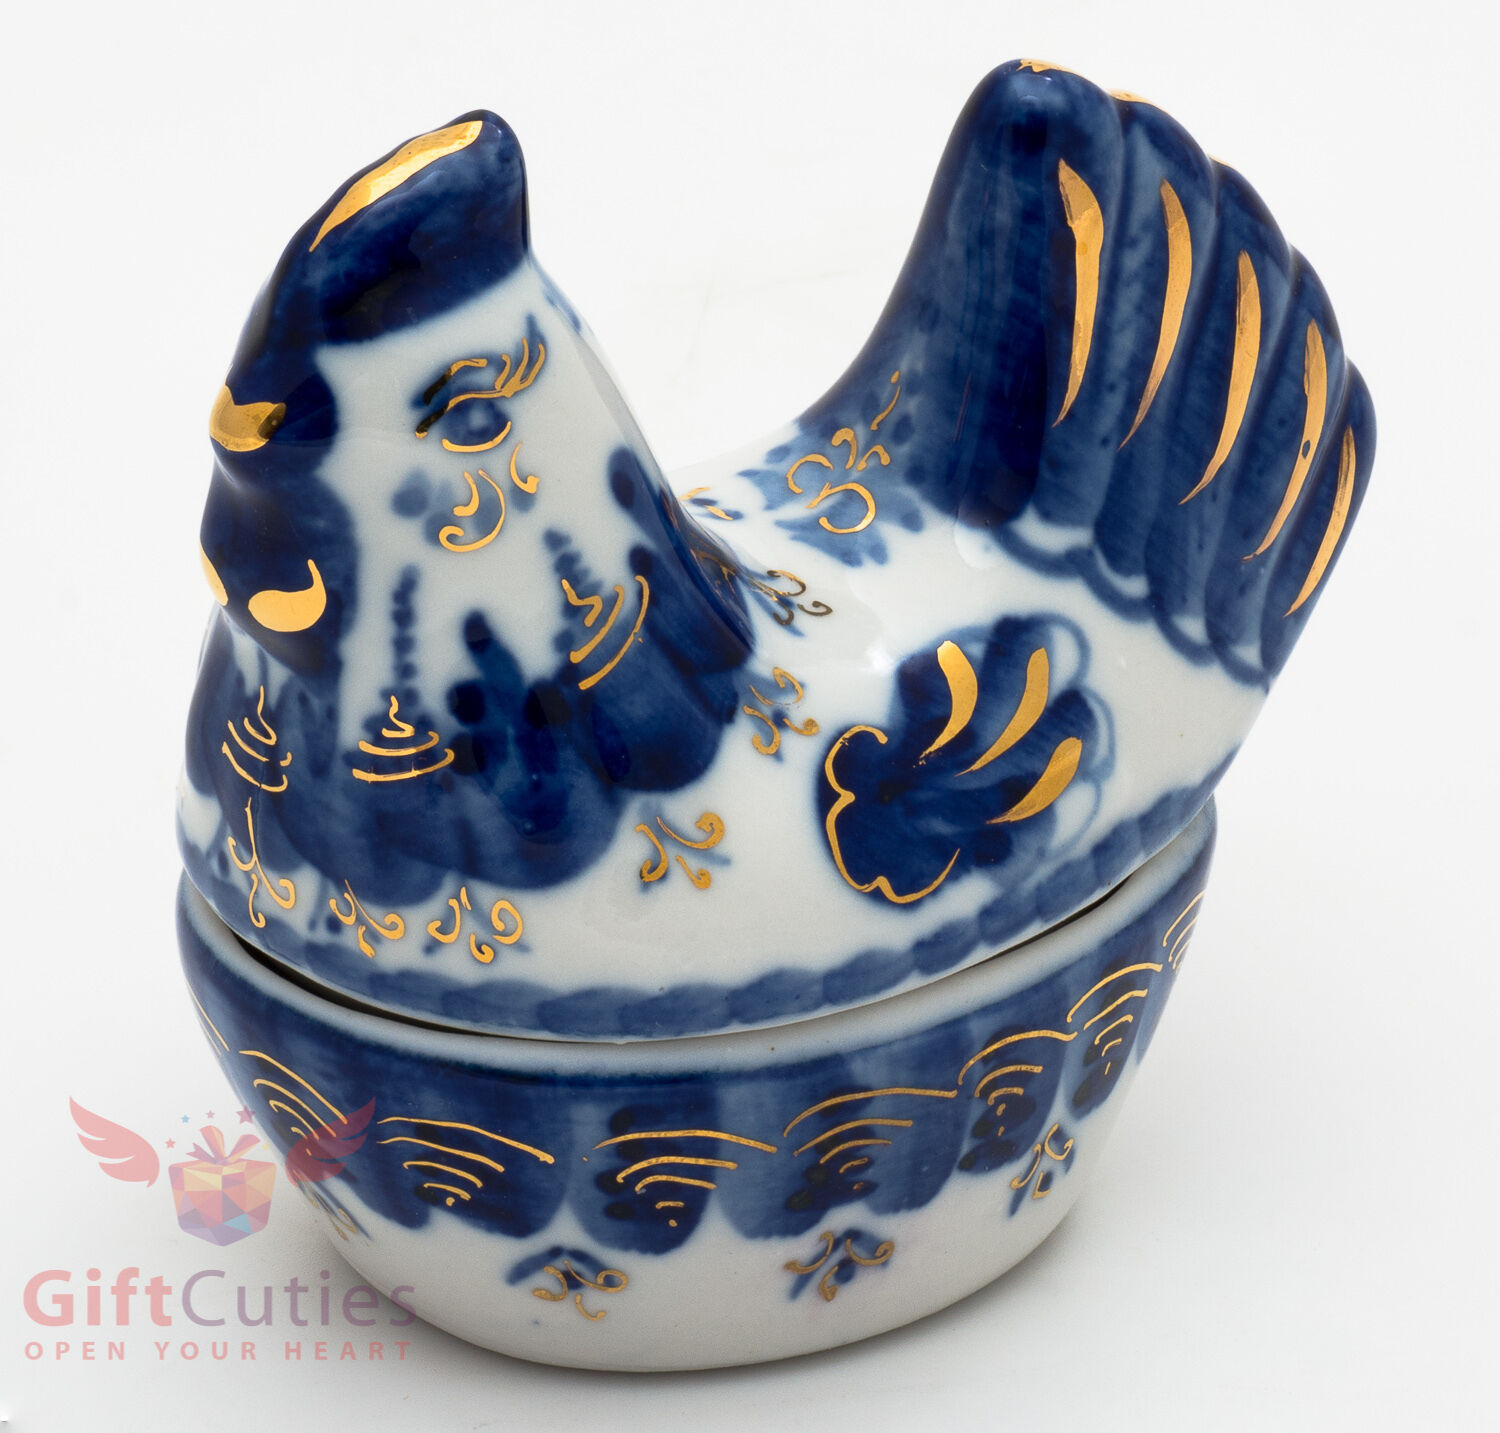 Beautiful Gzhel Porcelain Chicken Rooster trinket Box Figurine in blue & gold 